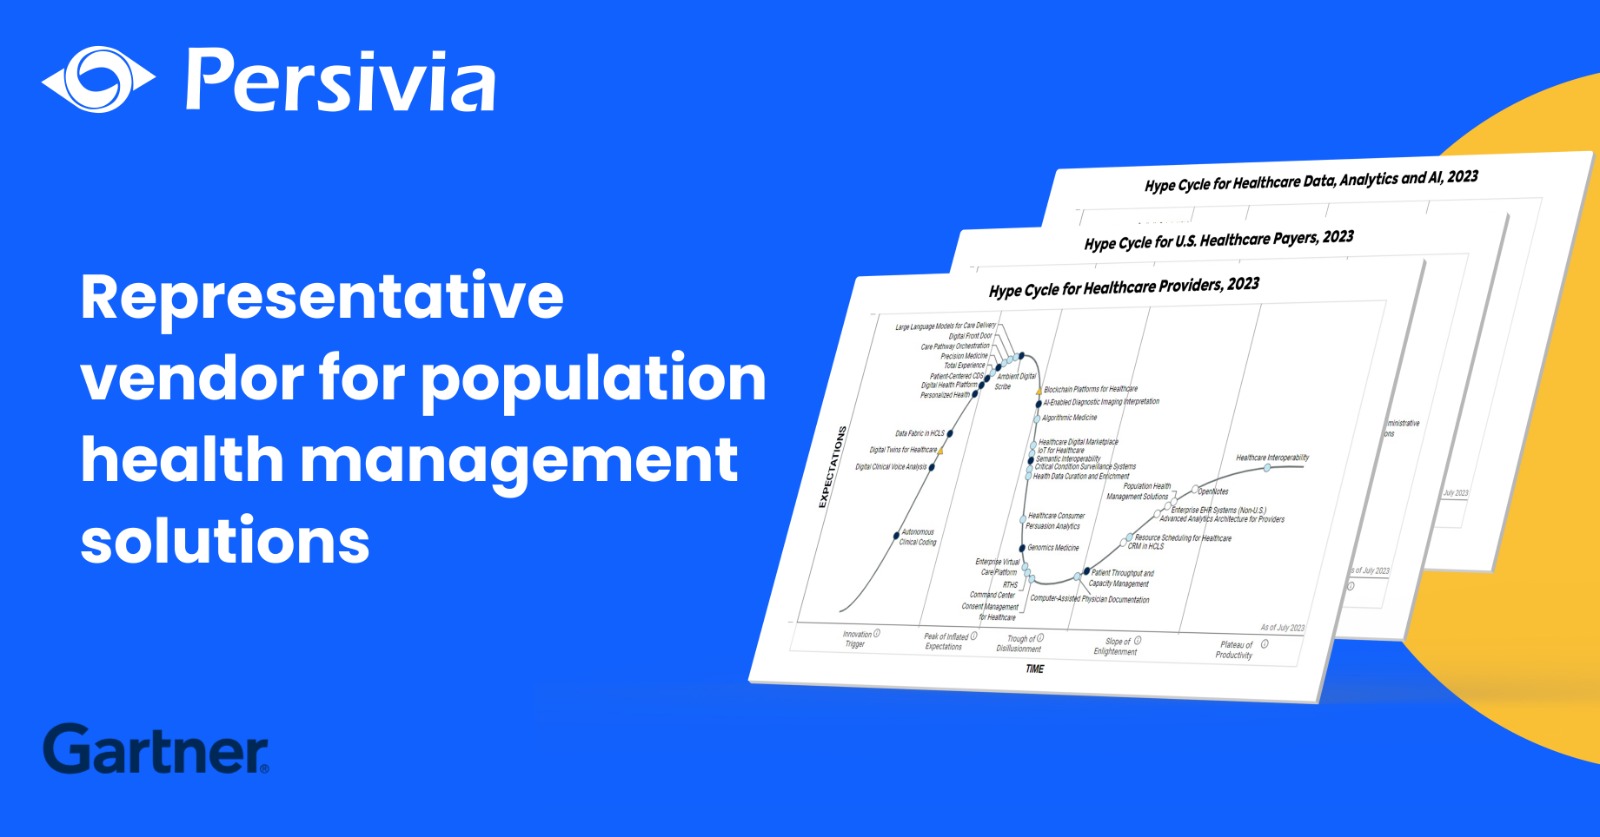 Persivia Recognized as a Sample Vendor in the Gartner Hype Cycle for Healthcare Data Analytics 2023